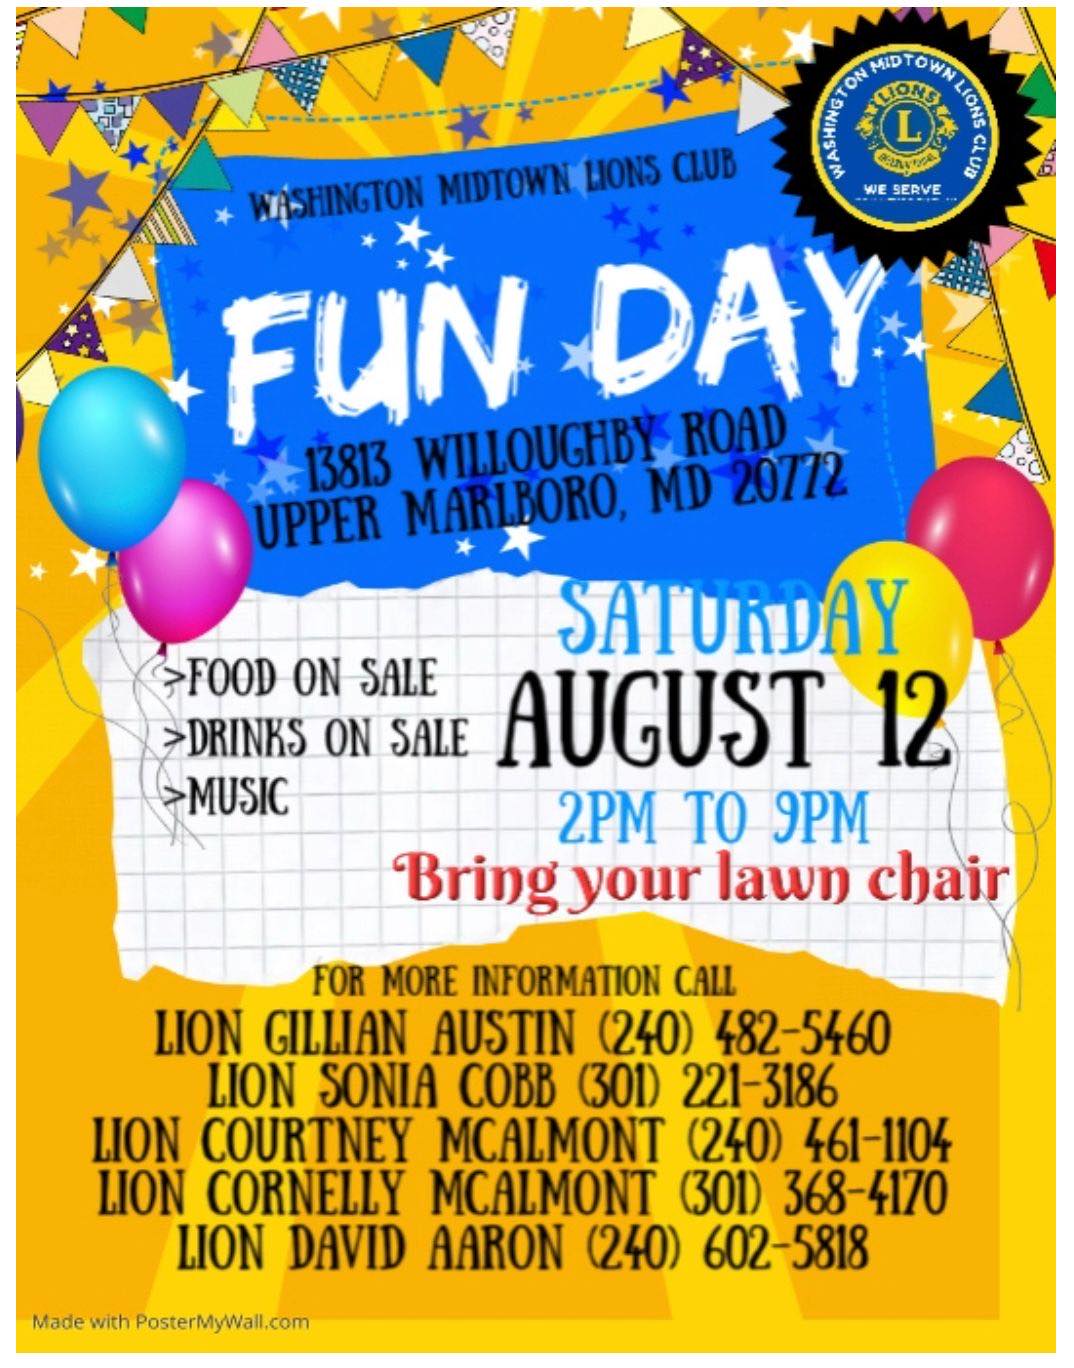 Washington Midtown "Lions Club Fun Day" 2023